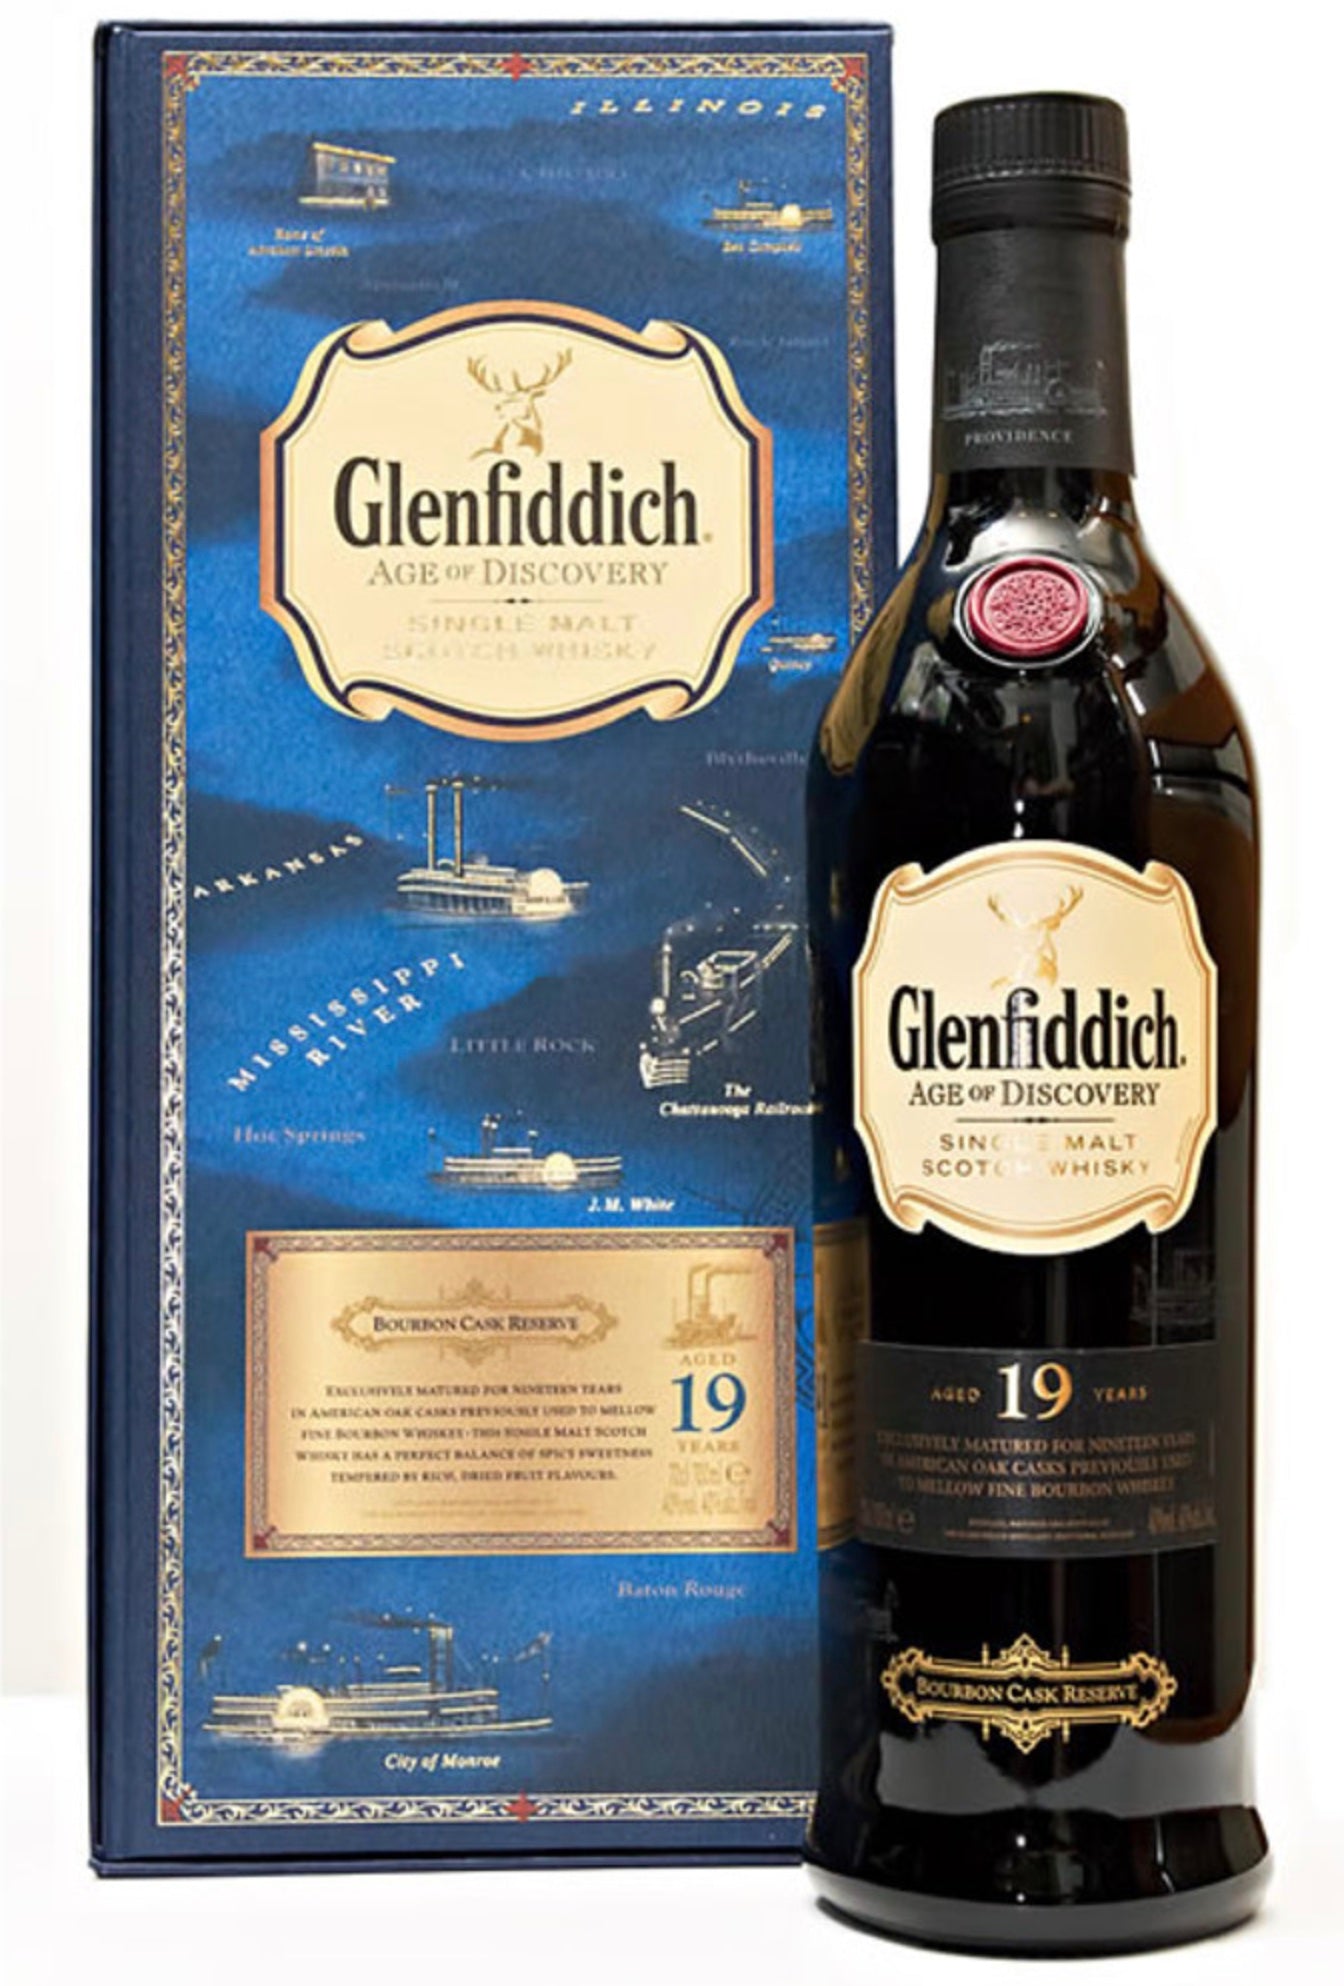 Glenfiddich 19 yr Age of Discovery Bourbon cask